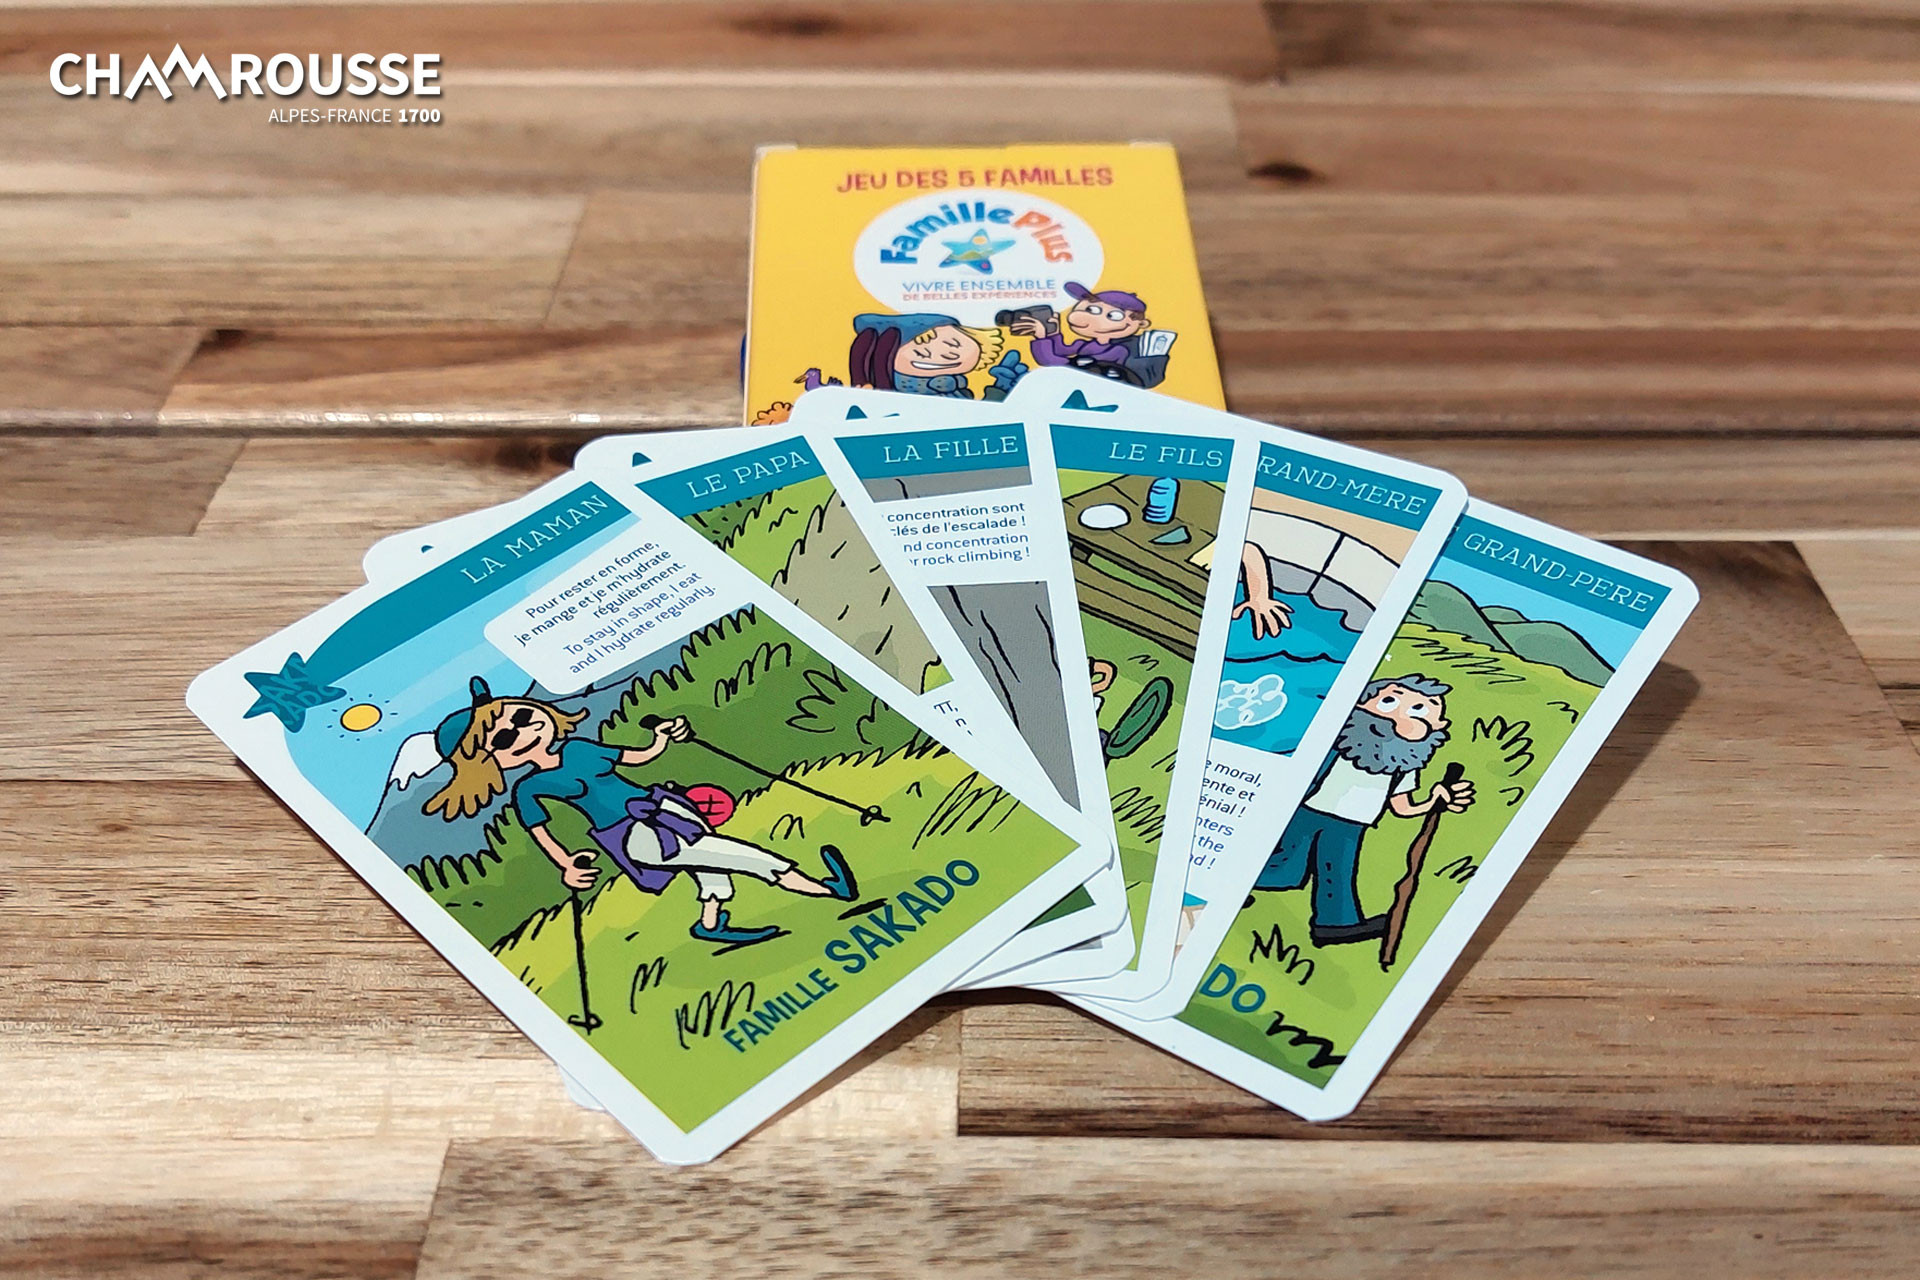 Chamrousse card game label family label 5 familles shop souvenir gift ski resort mountain grenoble isere french alps france